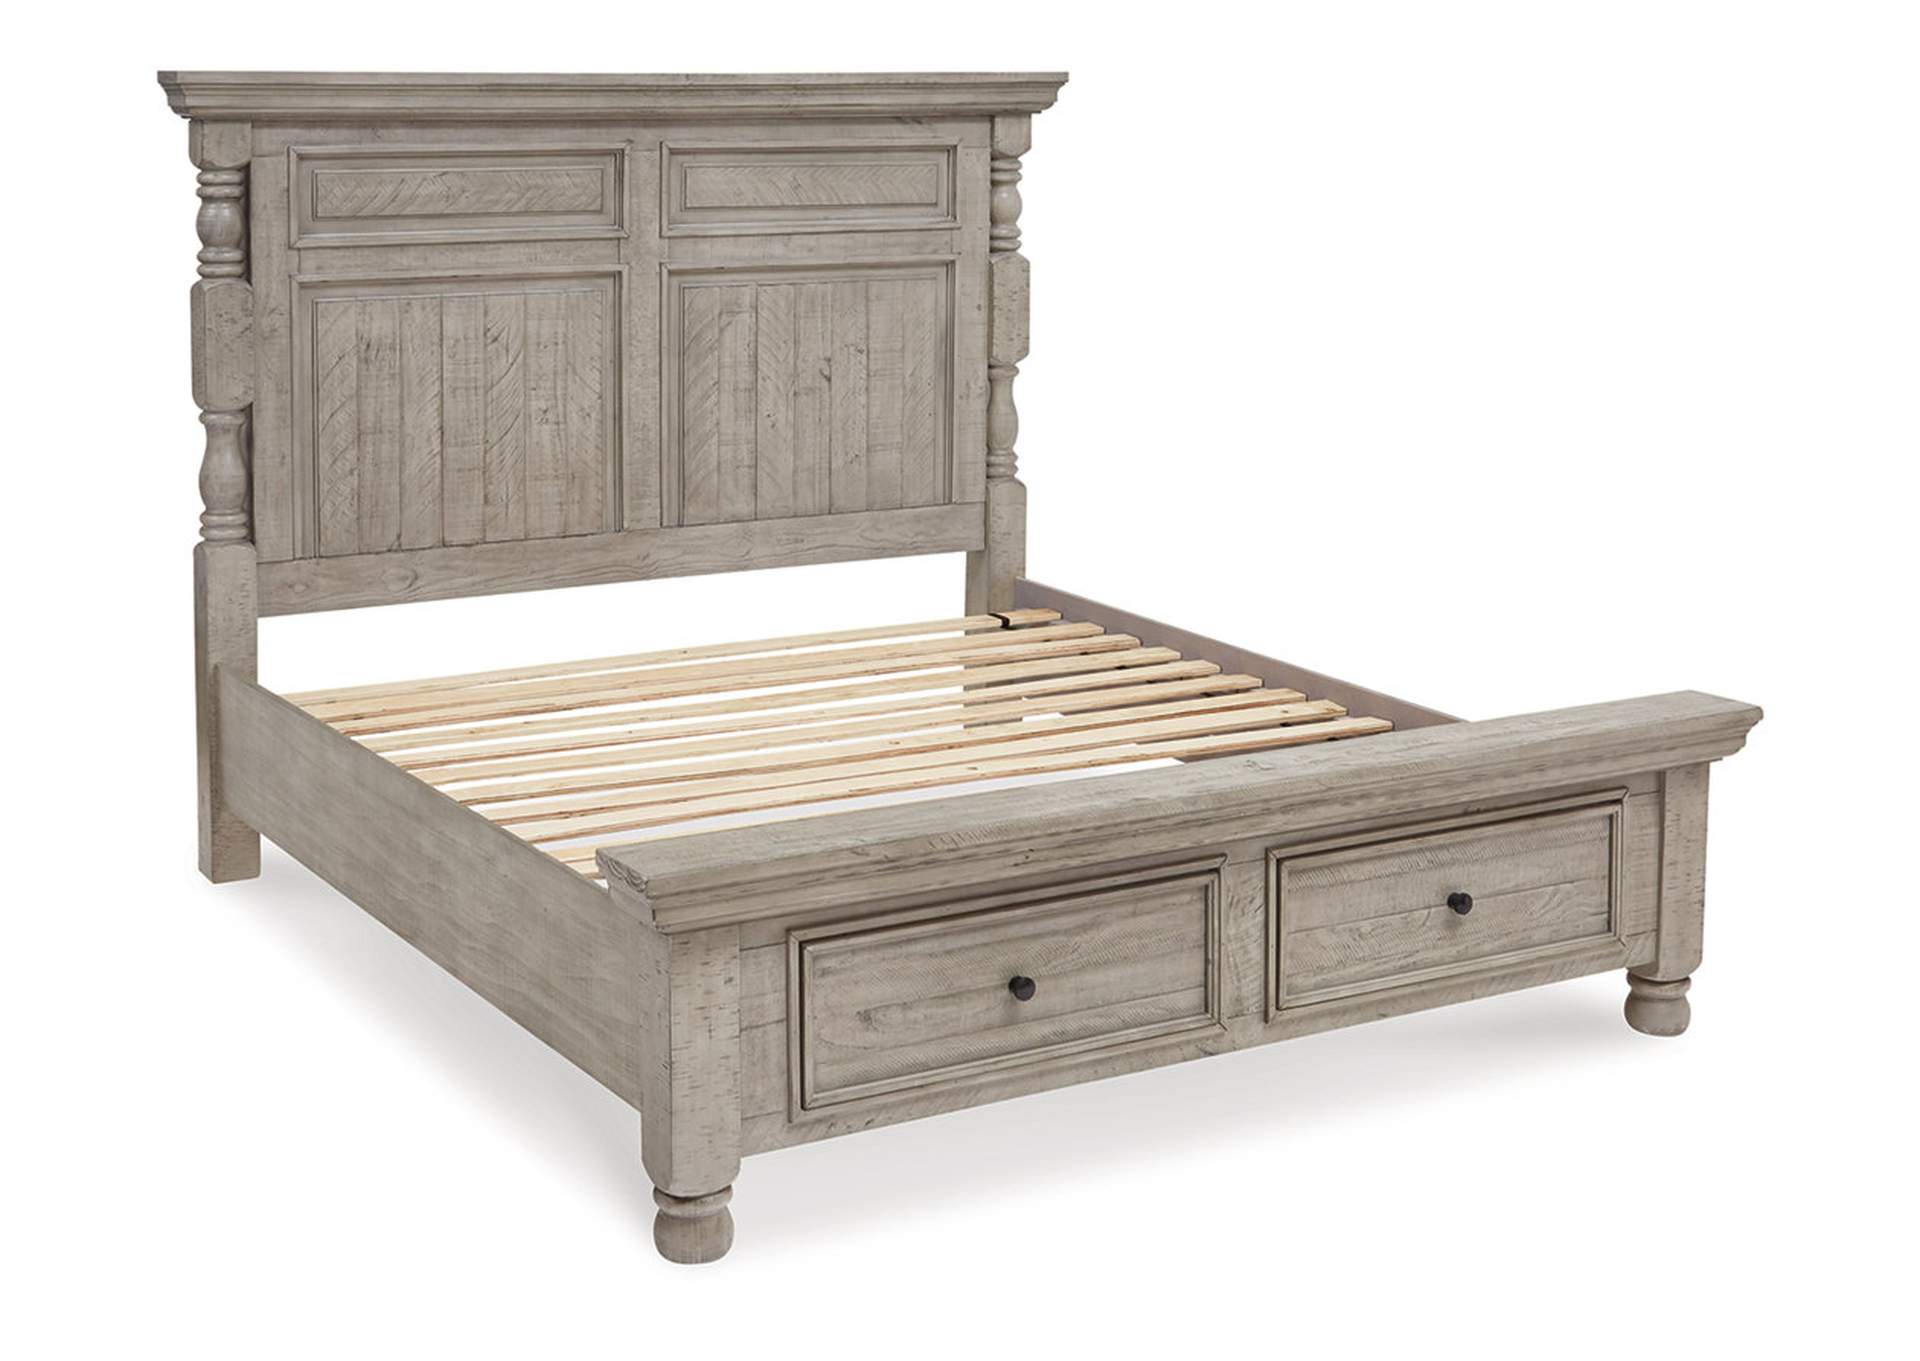 Harrastone King Panel Bed,Millennium